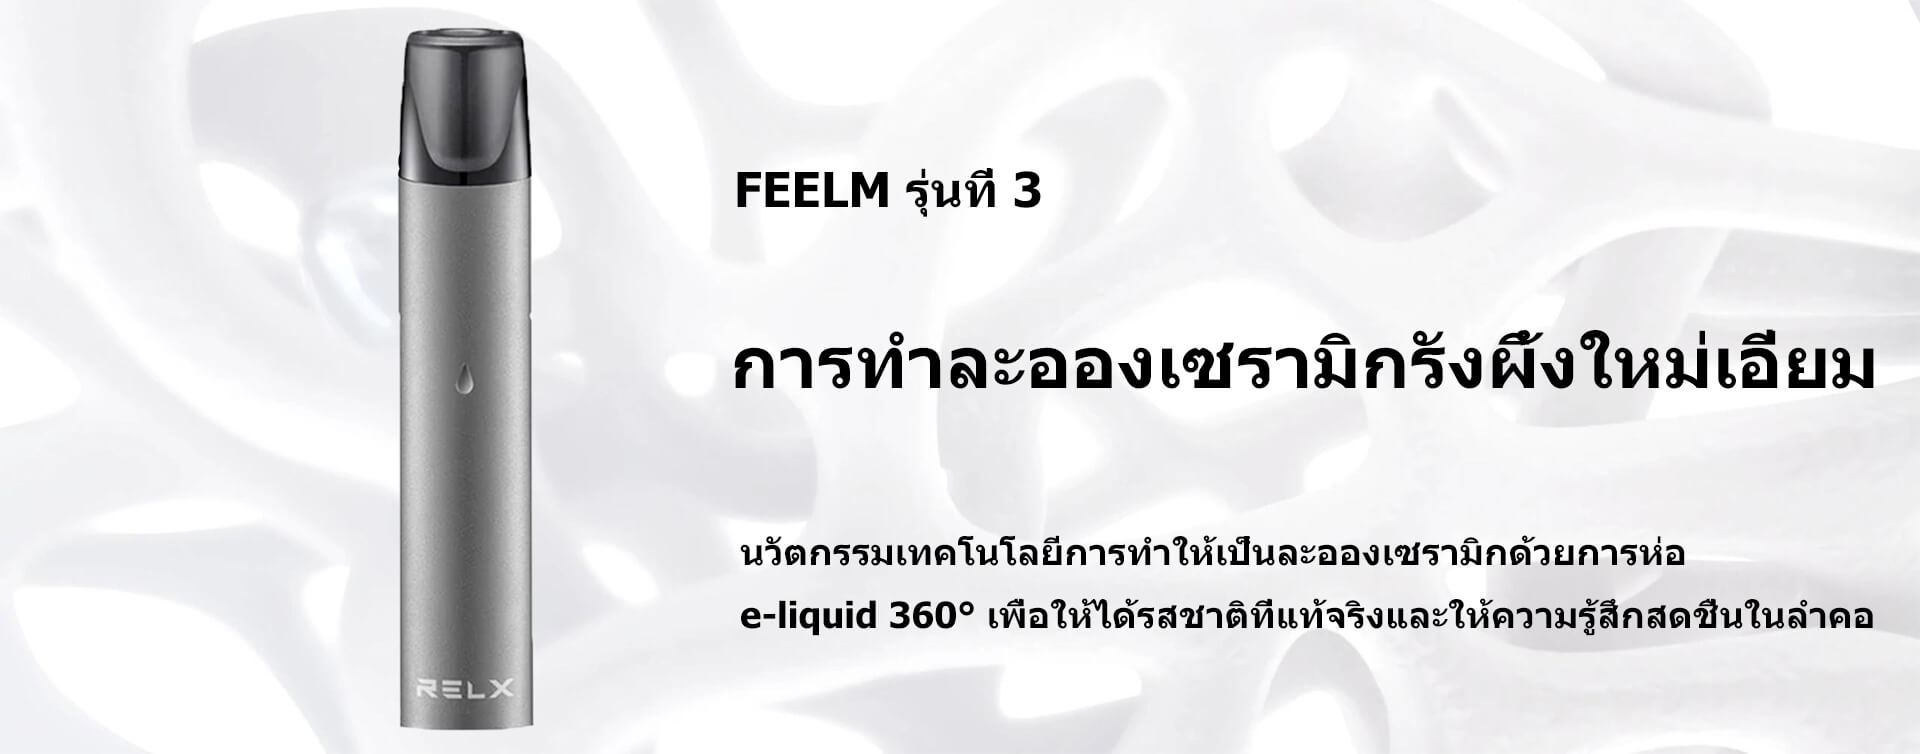 RELX Phantom รุ่นใหม่ 5th Generation​ | RELX Thailand RELX Classic Device | อุปกรณ์คลาสสิก RELX - สีเทาสเปซเกรย์